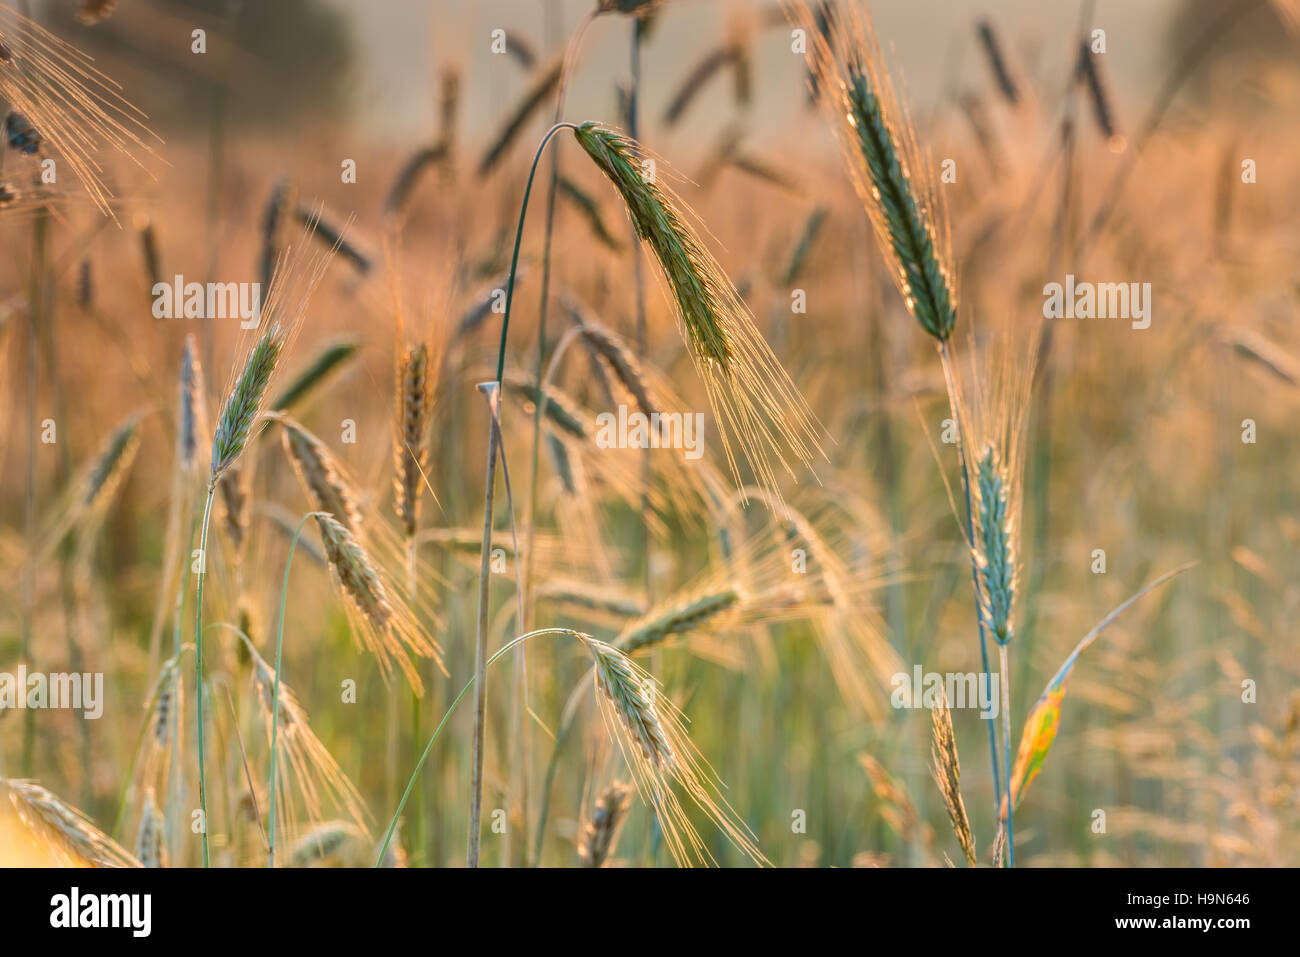 Dawn in a wheat field. Stock Photo